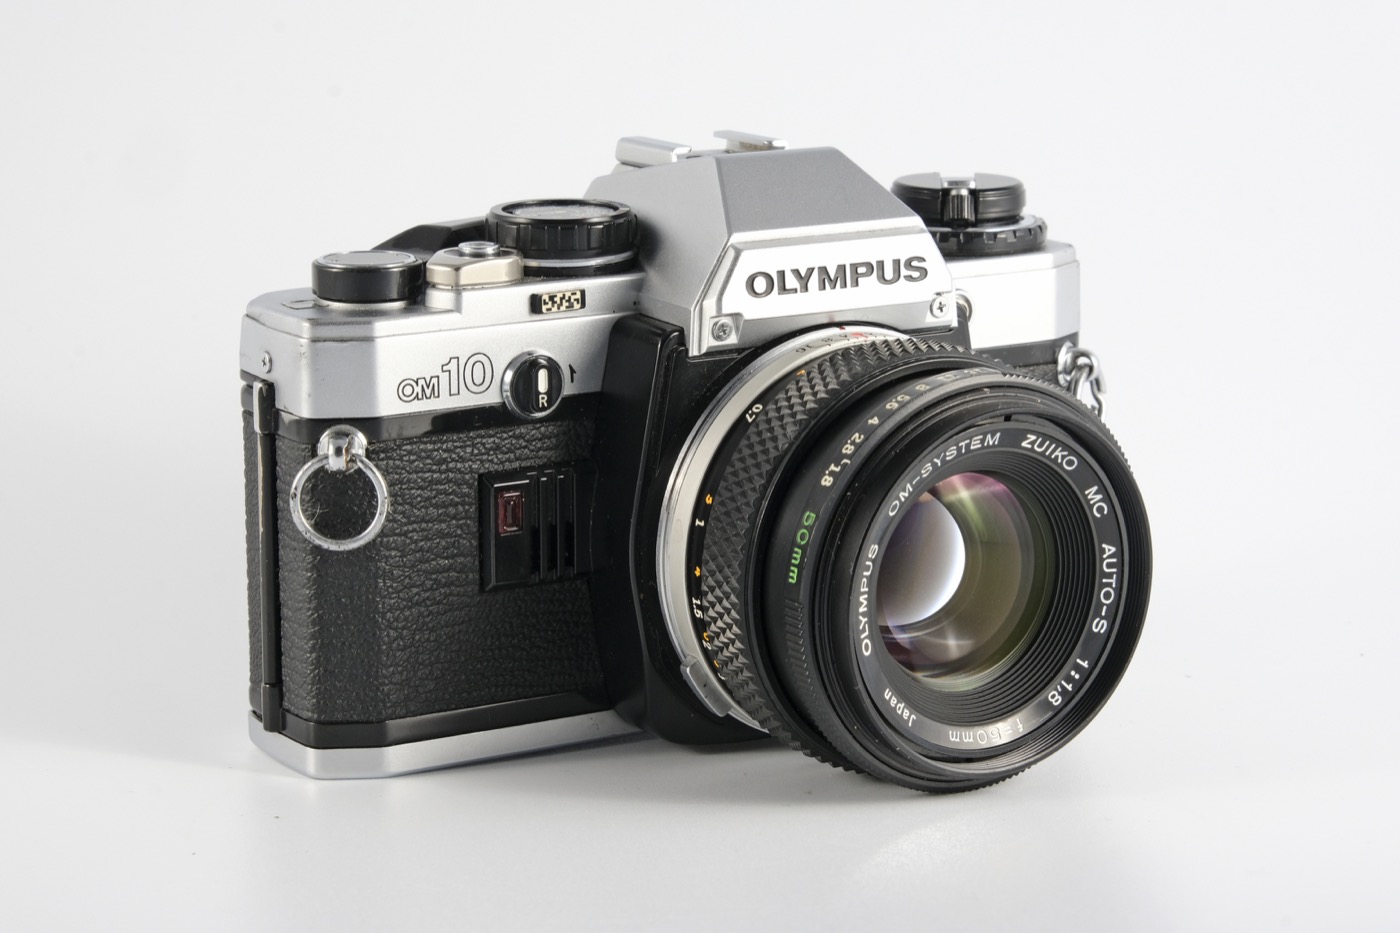 Olympus OM-10 camera